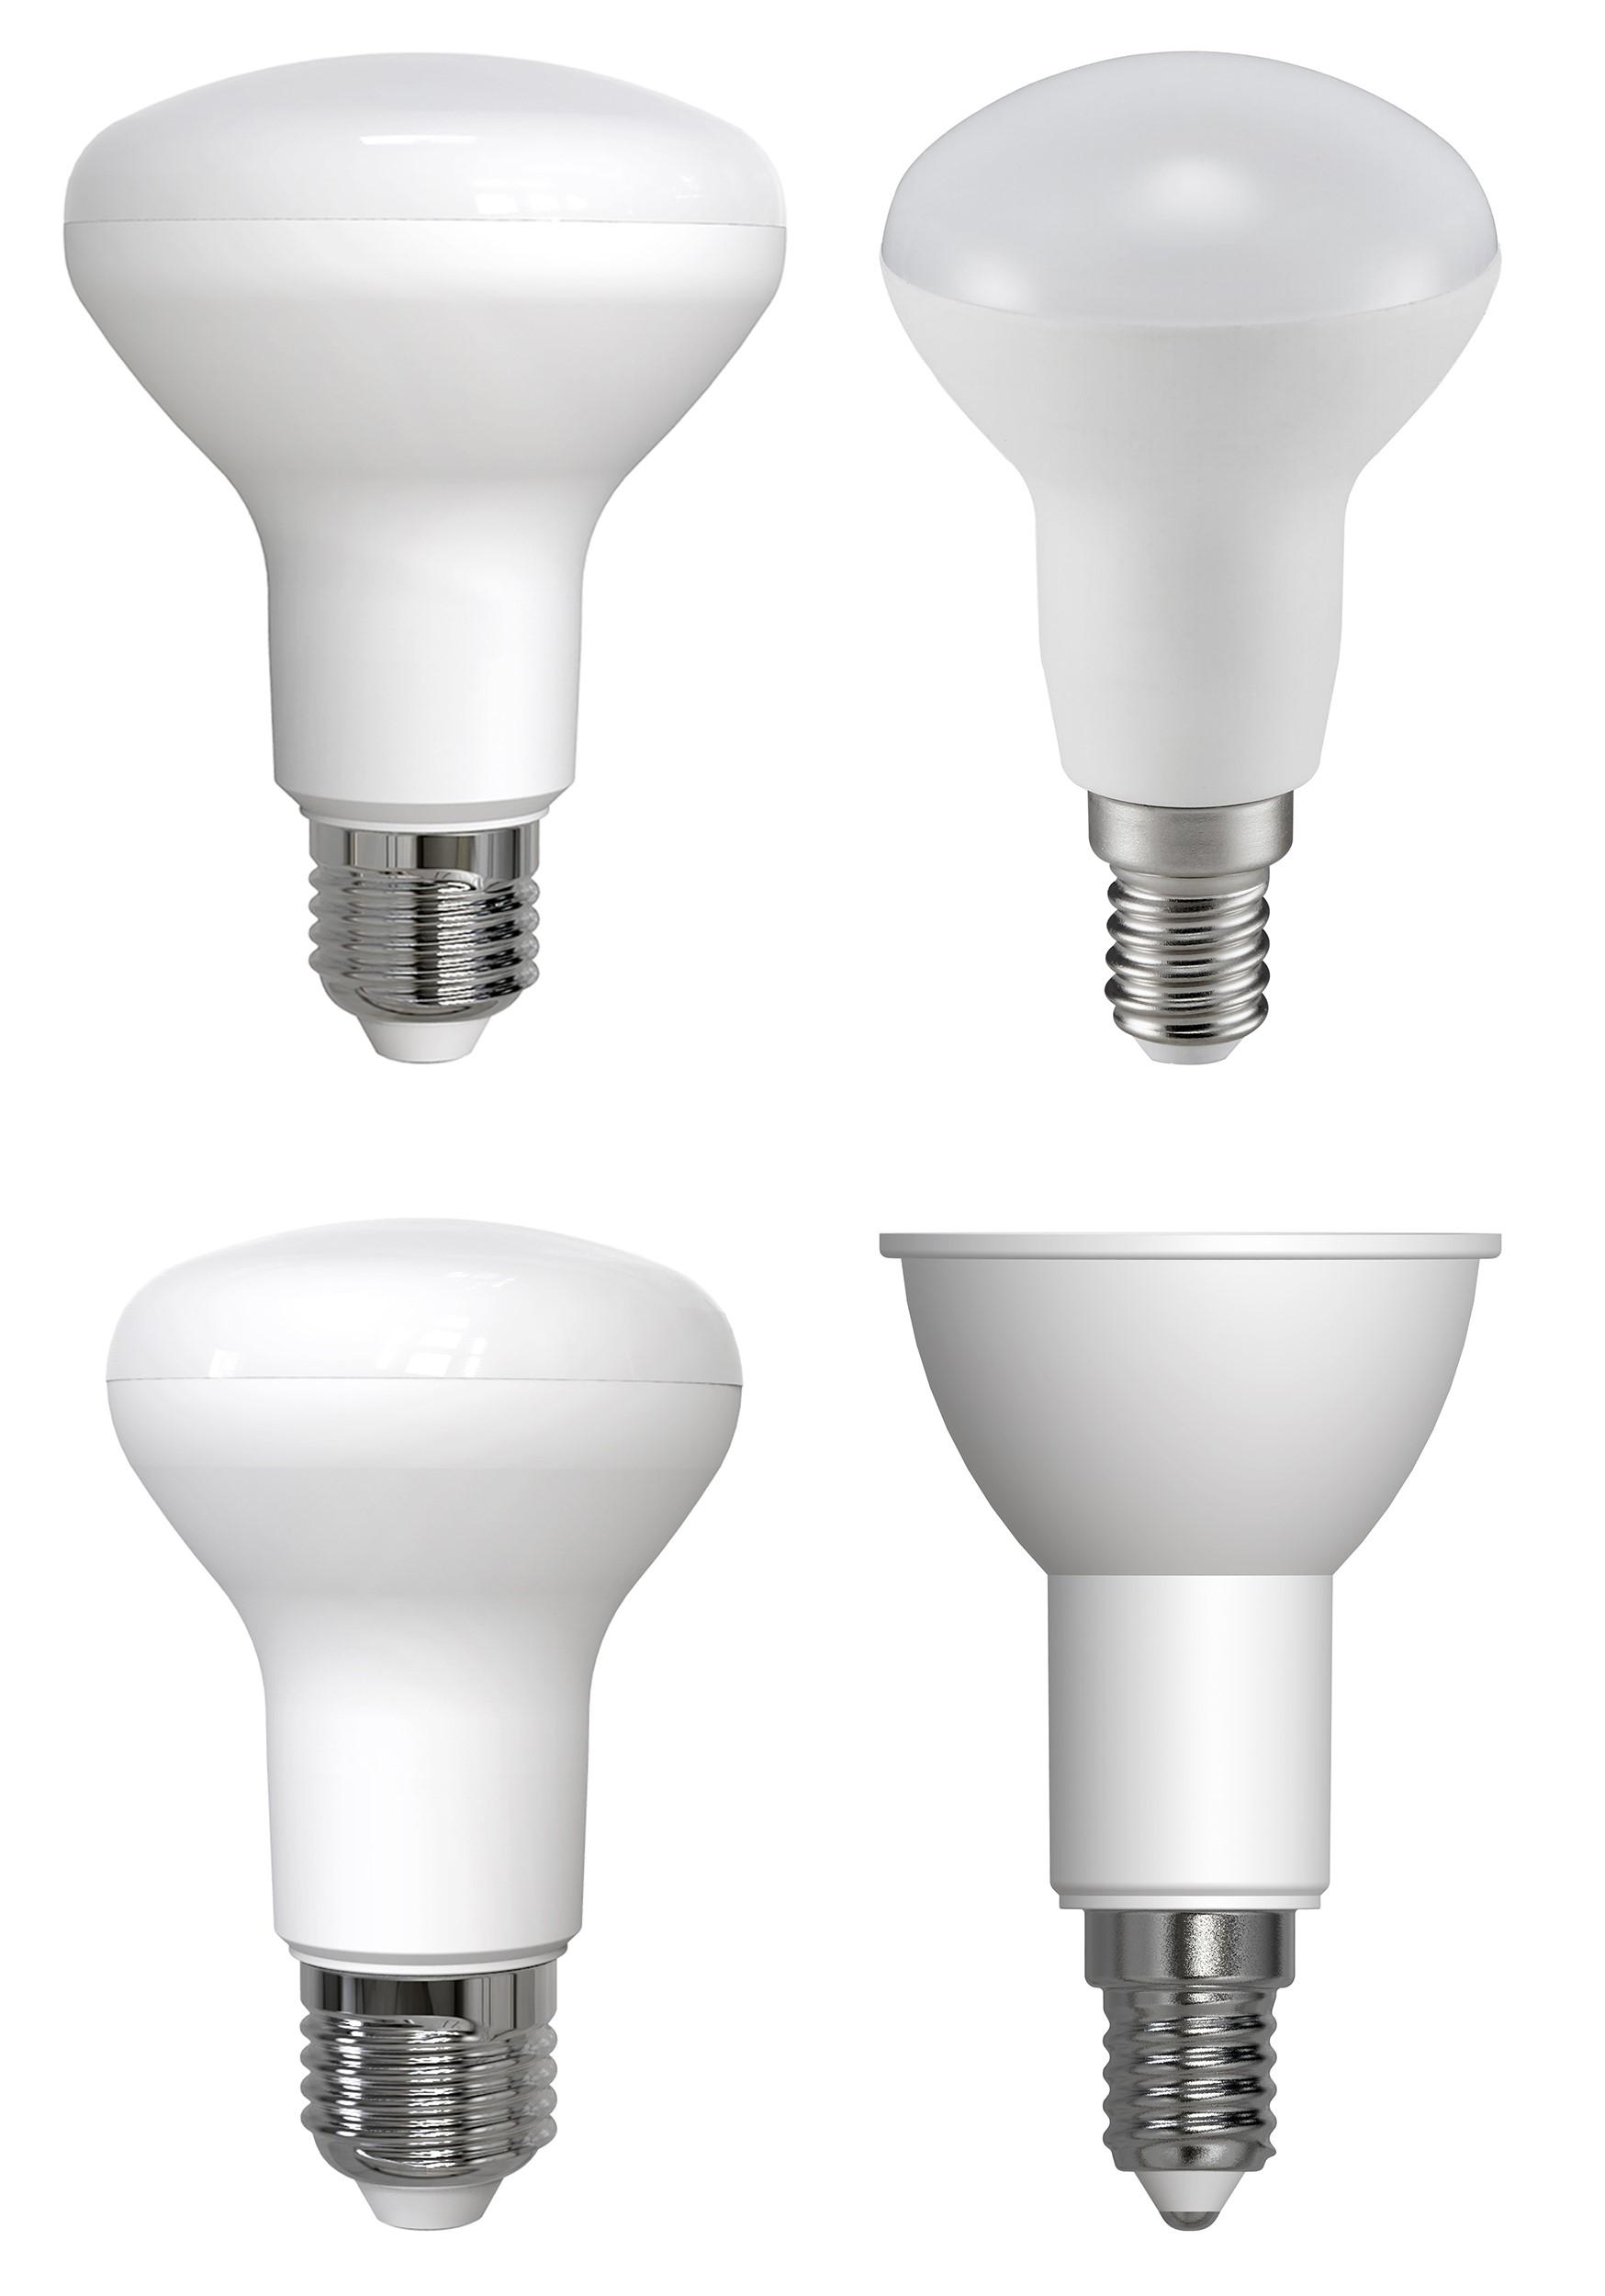 Müller Licht LED Reflektor Lampen - verschiedene Ausführungen